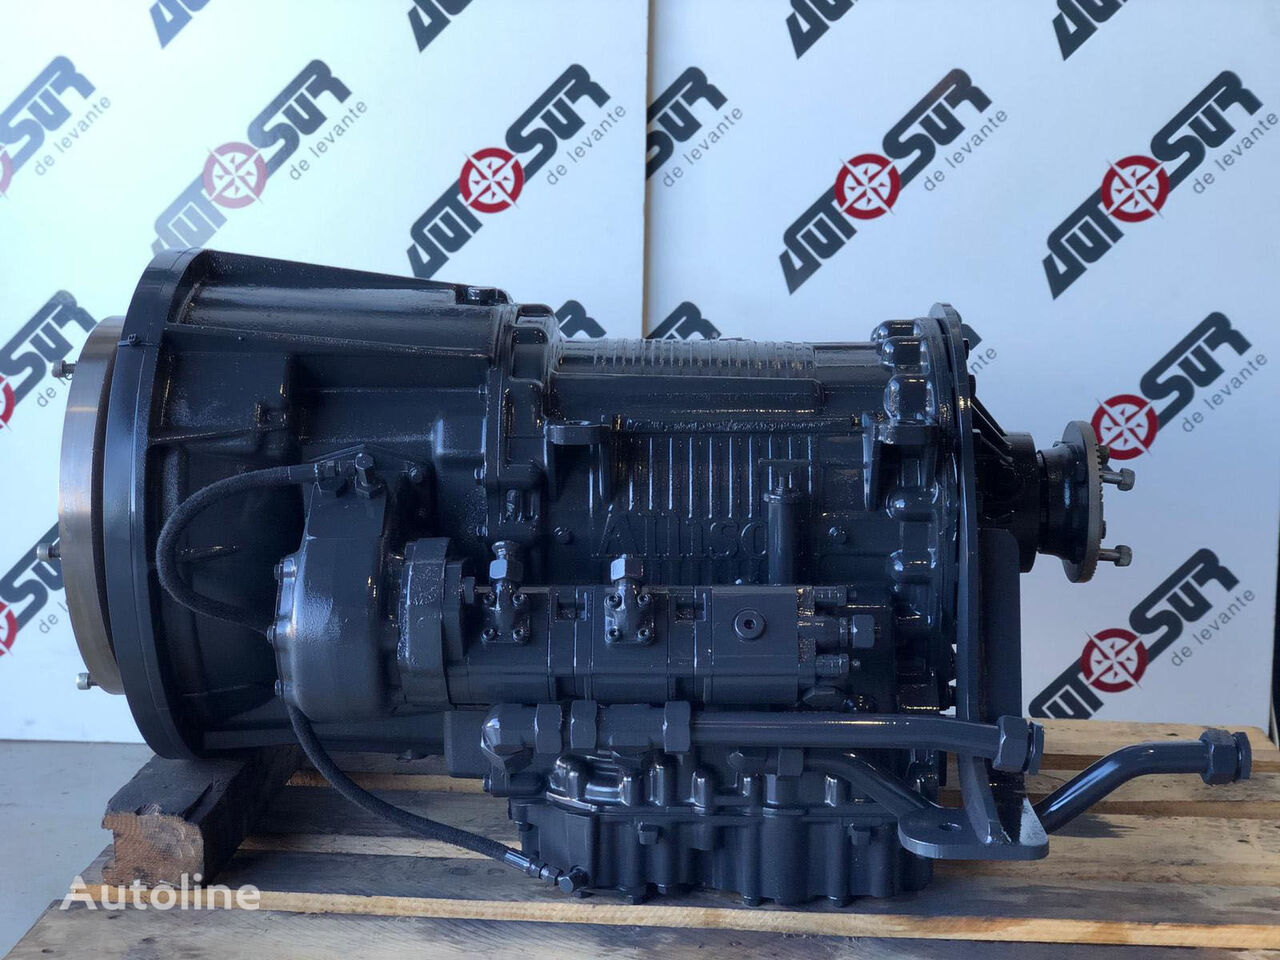 Allison MD3066-5824 ALLISON TID-3 gearbox for truck